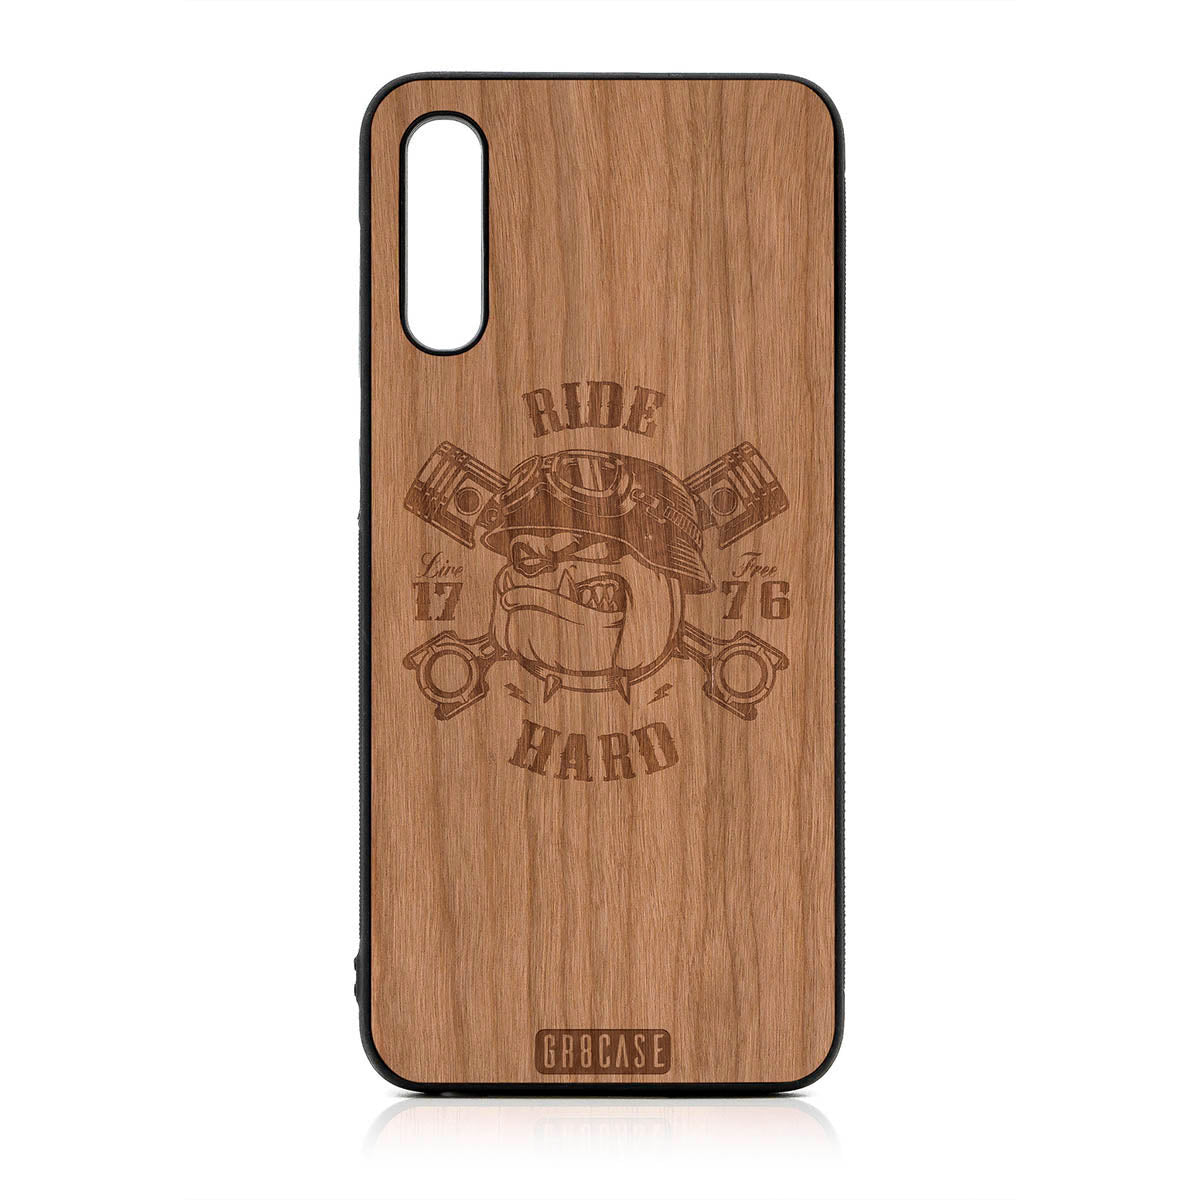 Ride Hard Live Free (Biker Dog) Design Wood Case For Samsung Galaxy A50 by GR8CASE